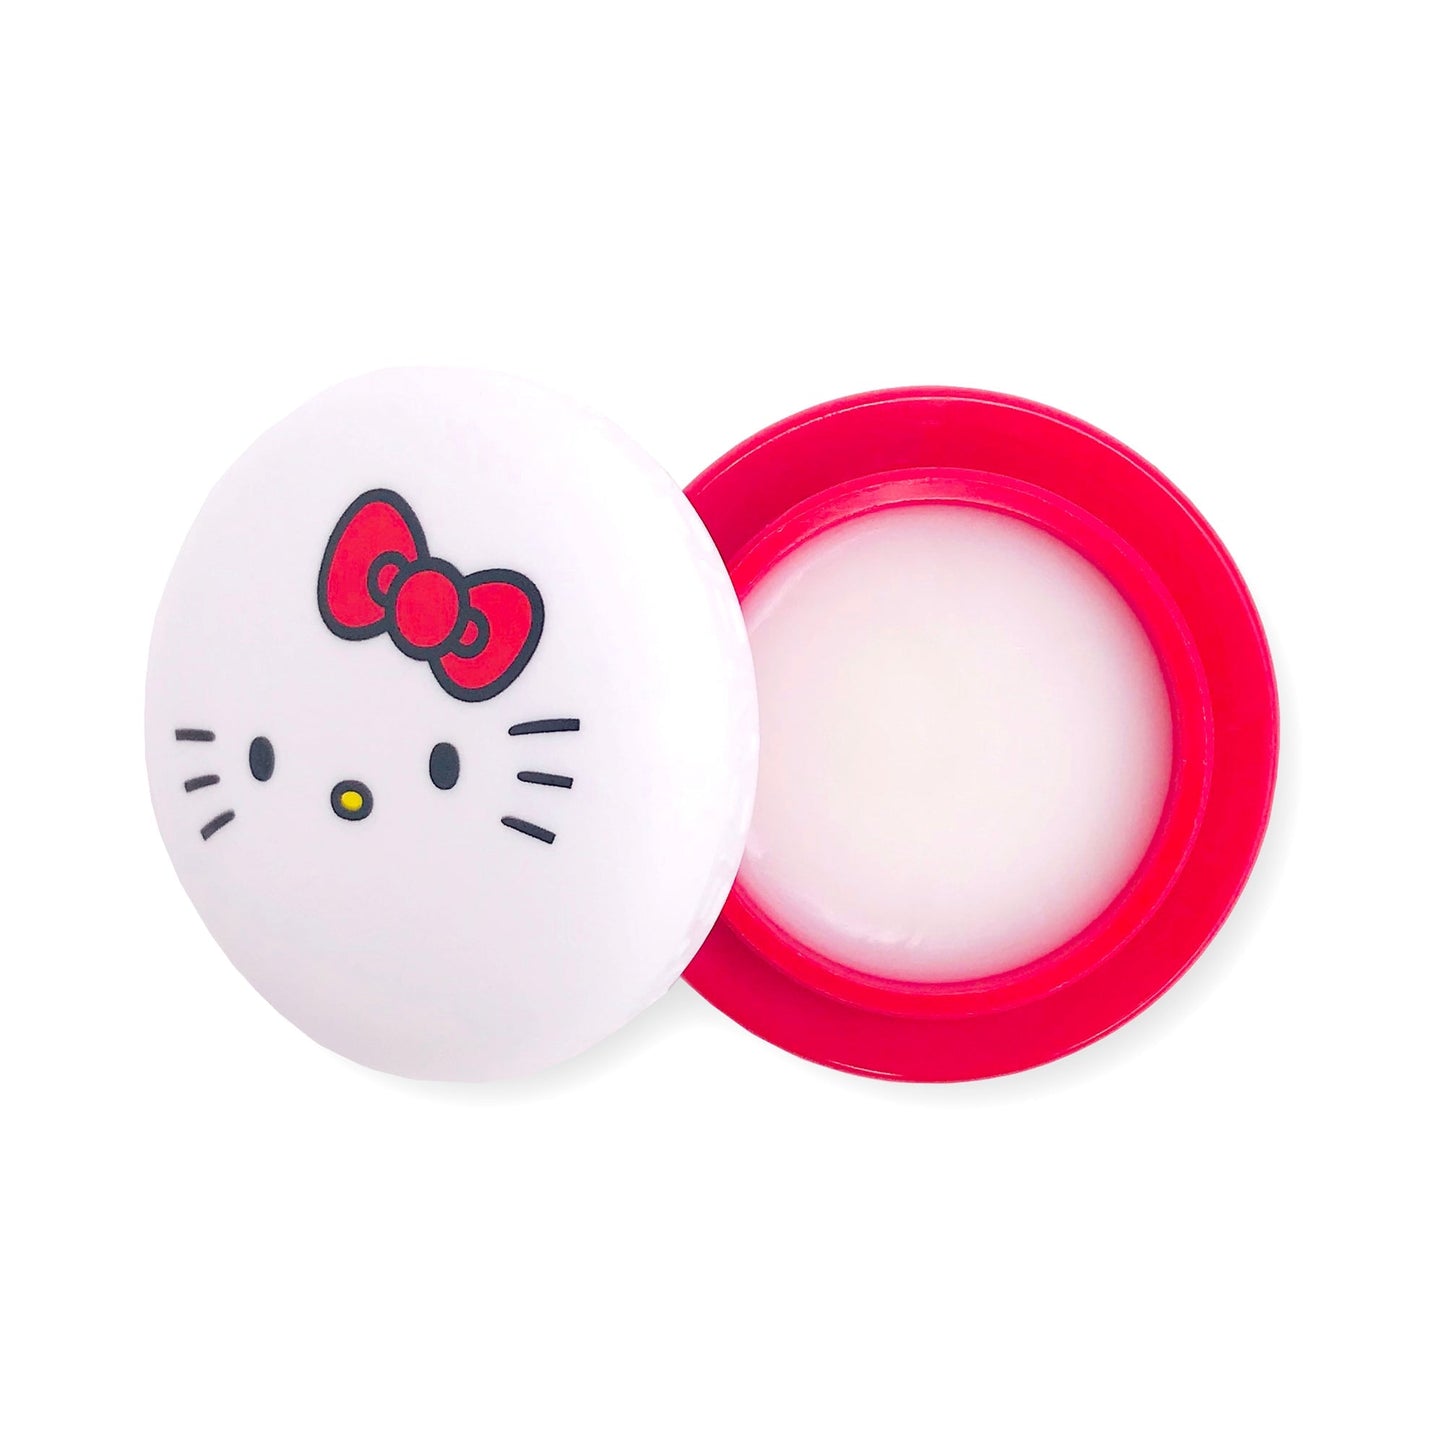 Hello Kitty & BT21 MANG Moisturizing Macaron Lip Balm Duo, Mixed Berry Flavored